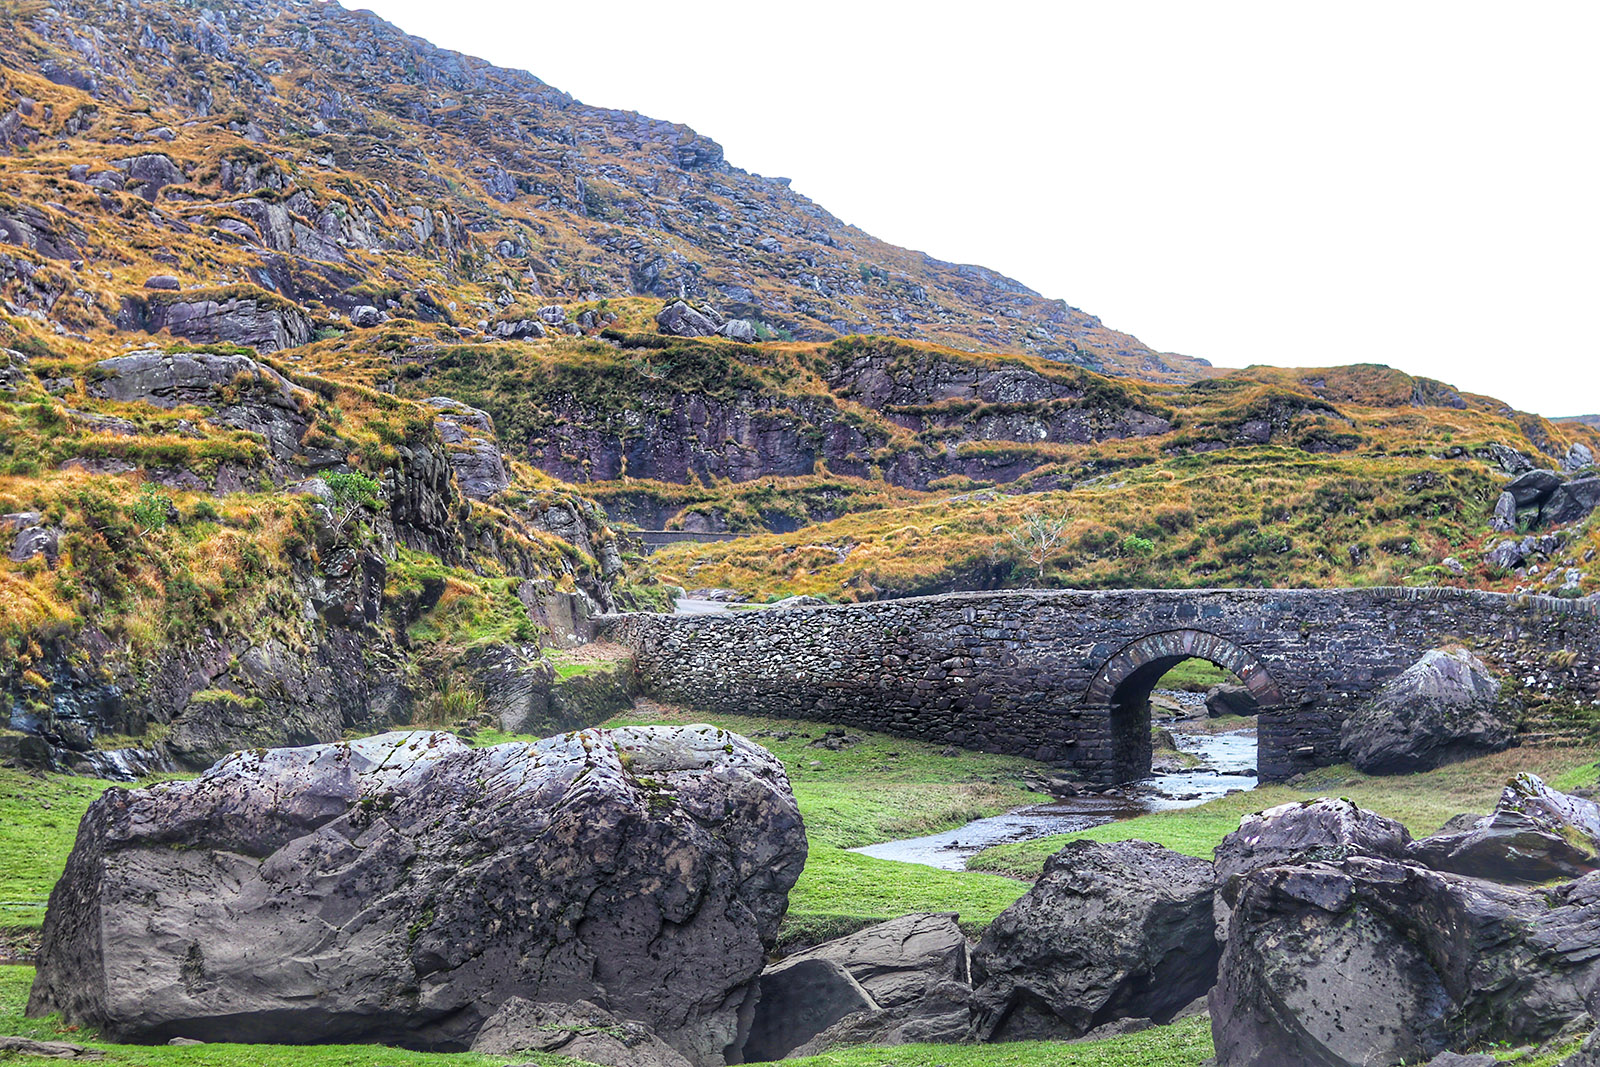 stone bridge and green hills at gap of dunloe, ireland